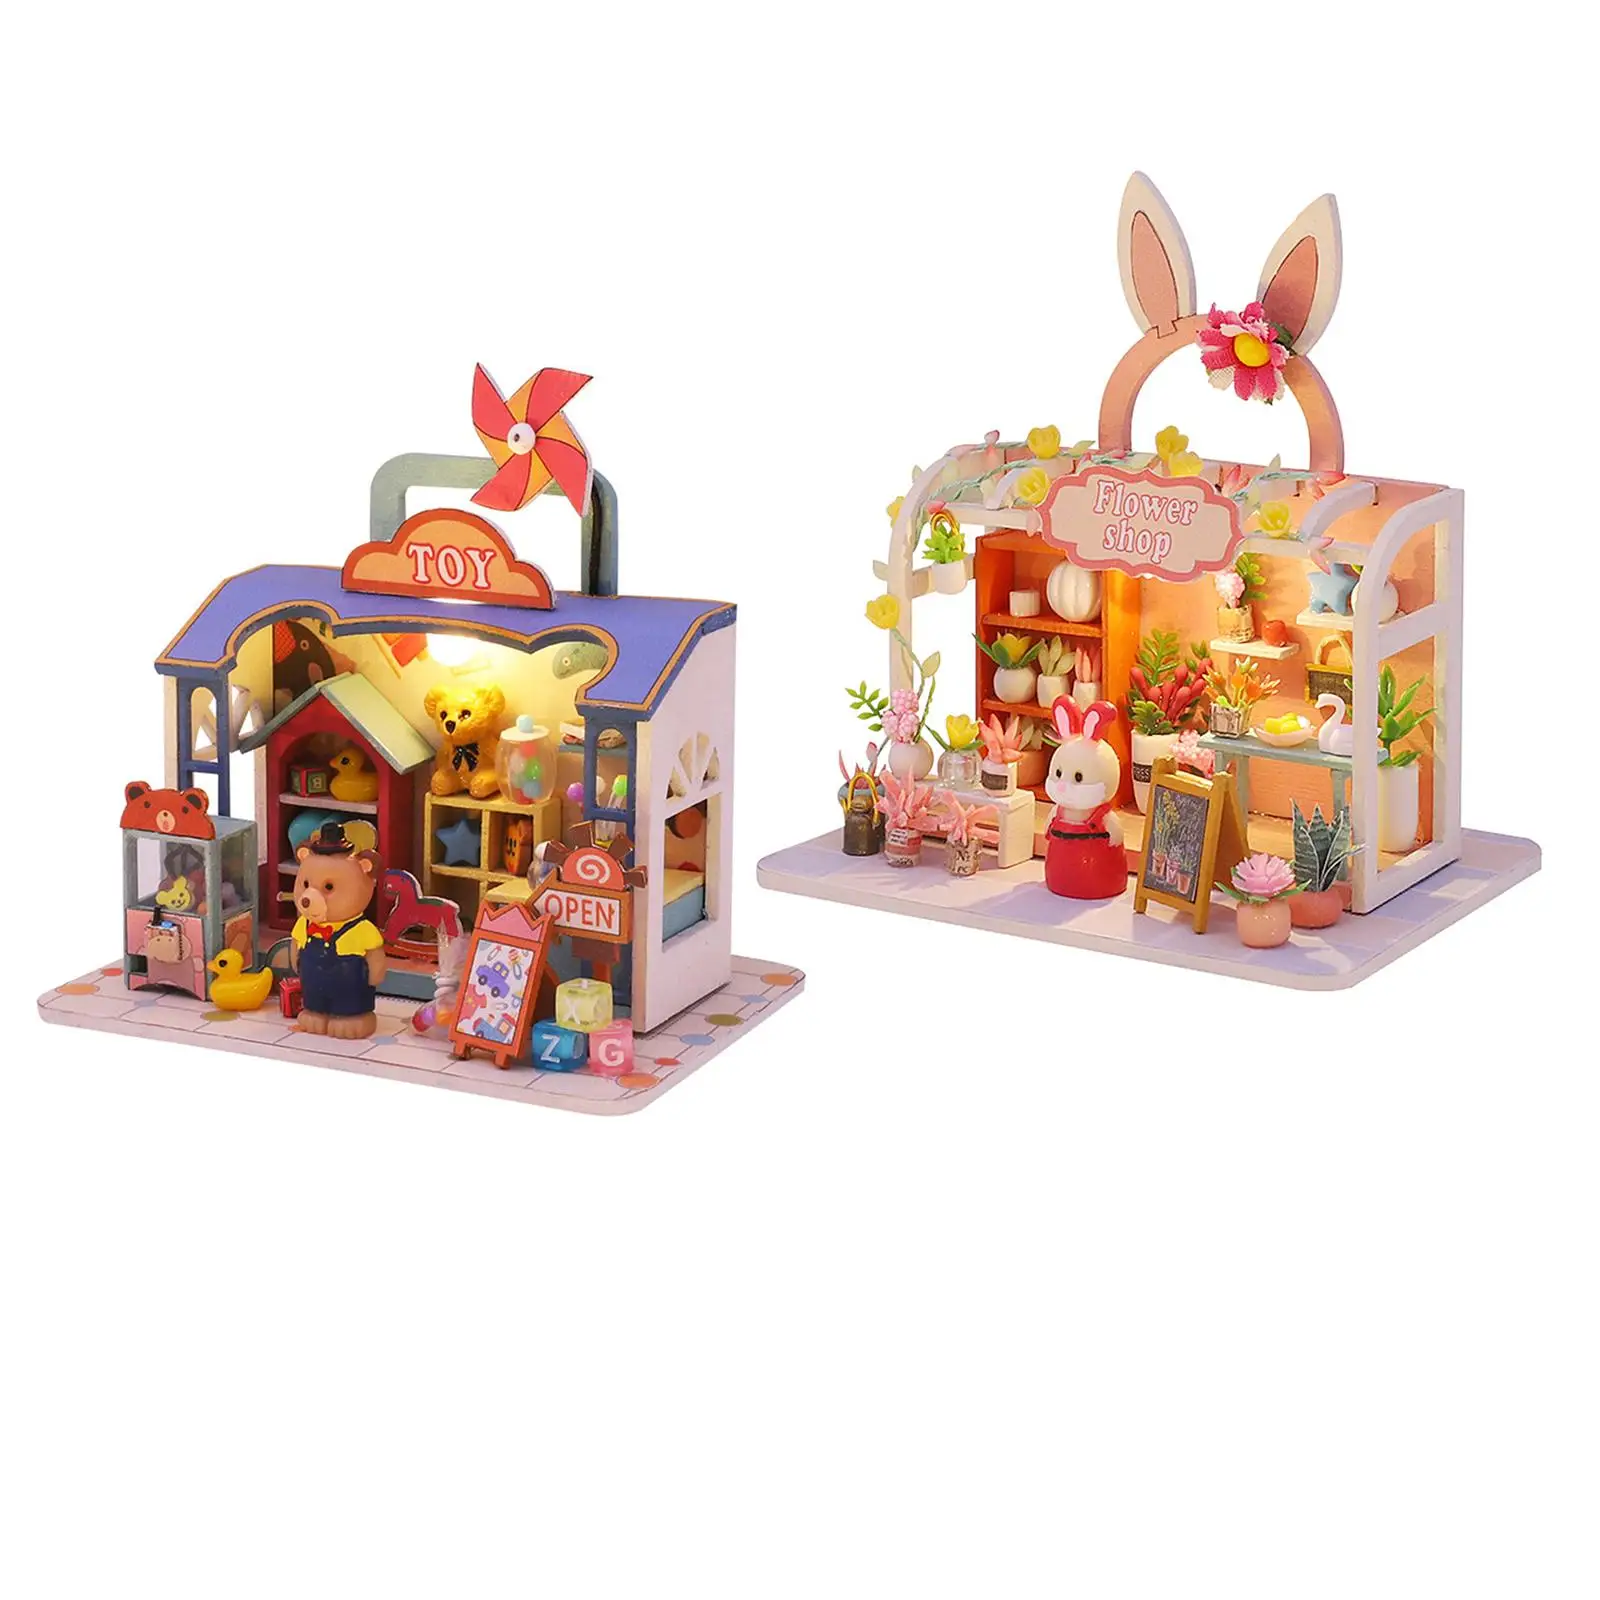 Creative DIY Miniature Dollhouse Toy for Girls Mini House Decor Accessory